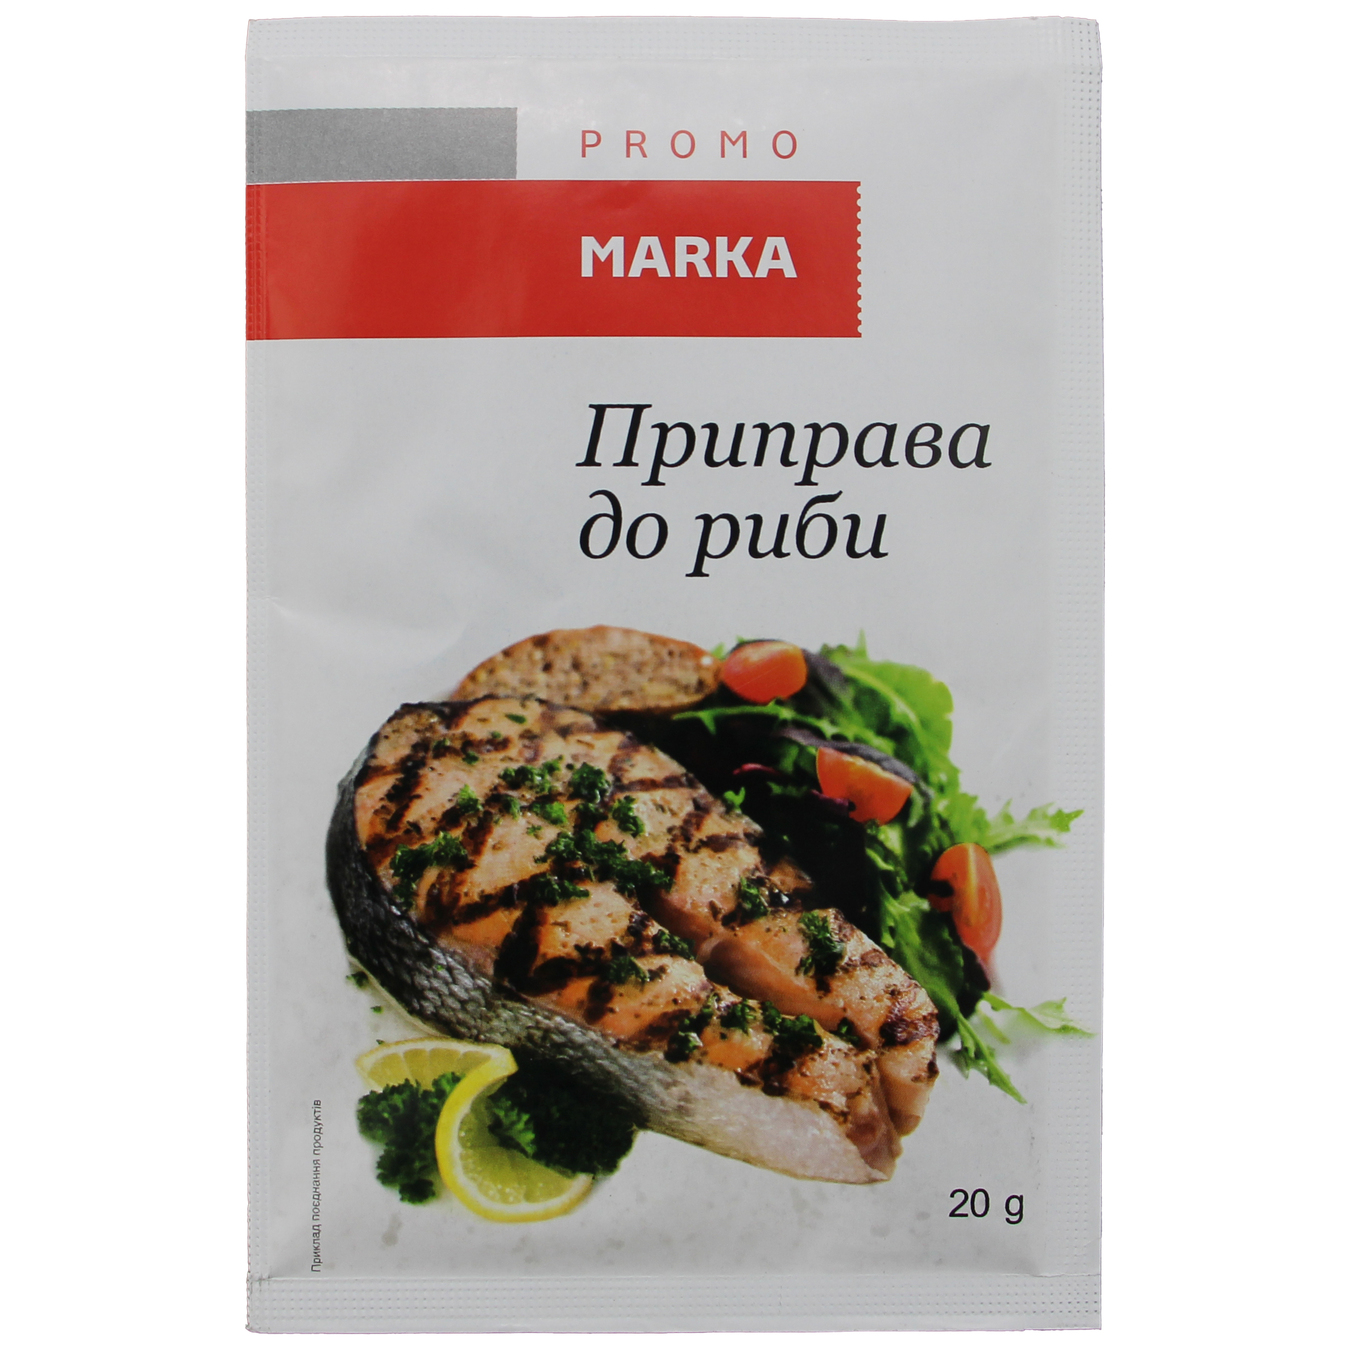 Marka Promo Spice for Fish 20g